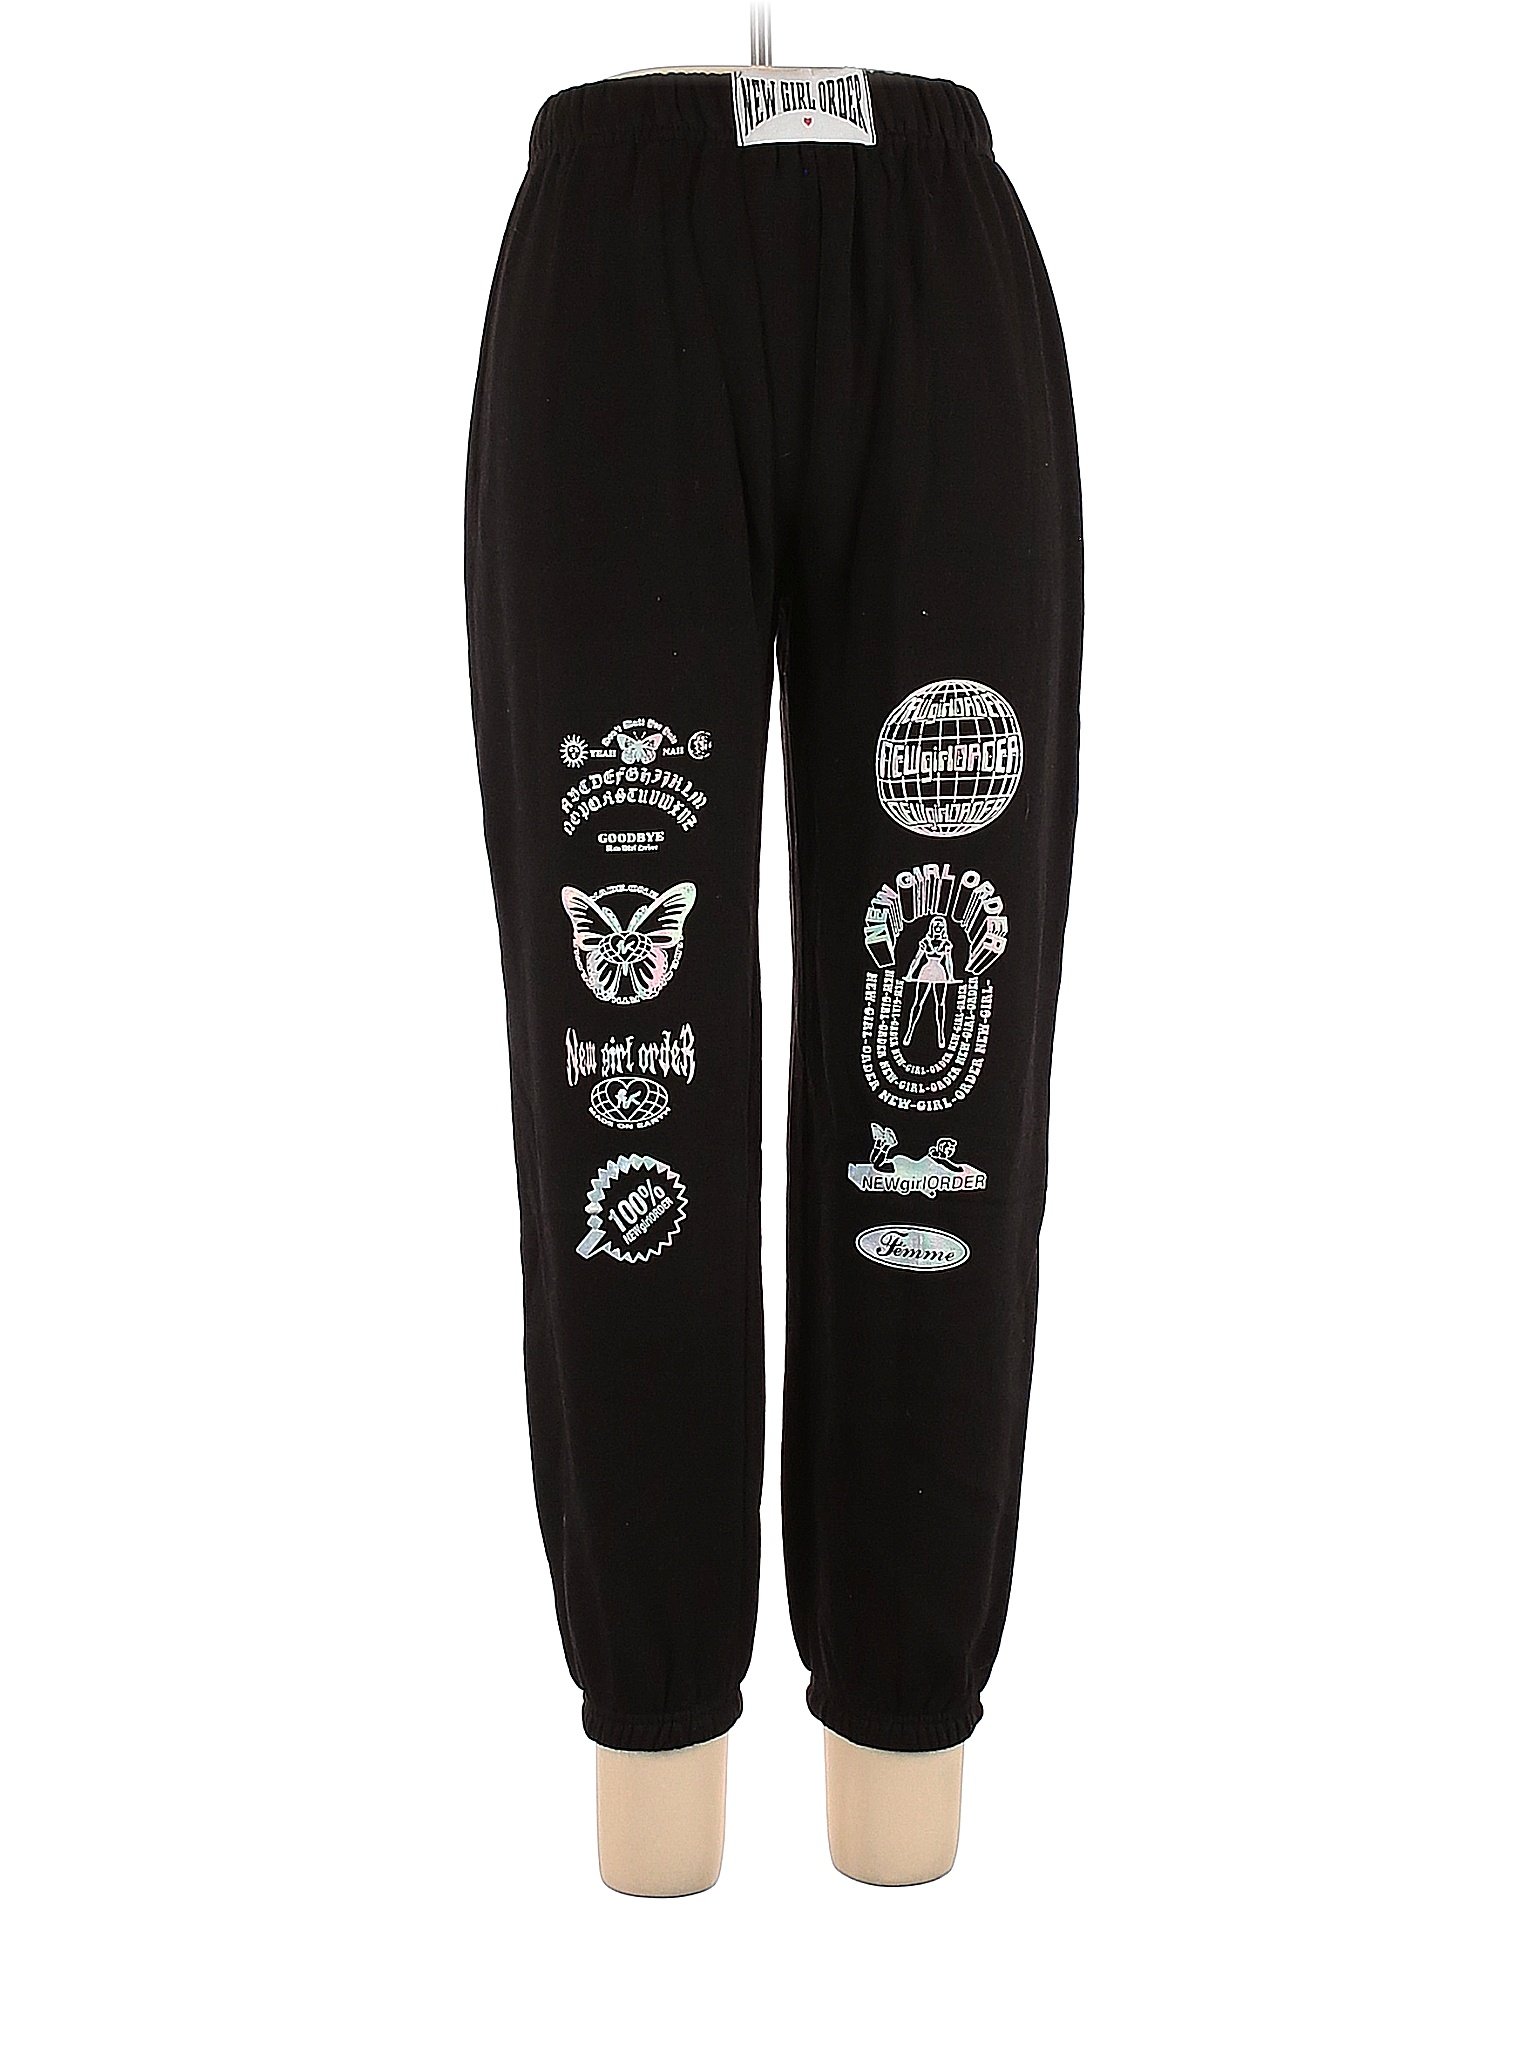 New Girl Order Solid Black Sweatpants Size 12 - 60% off | thredUP